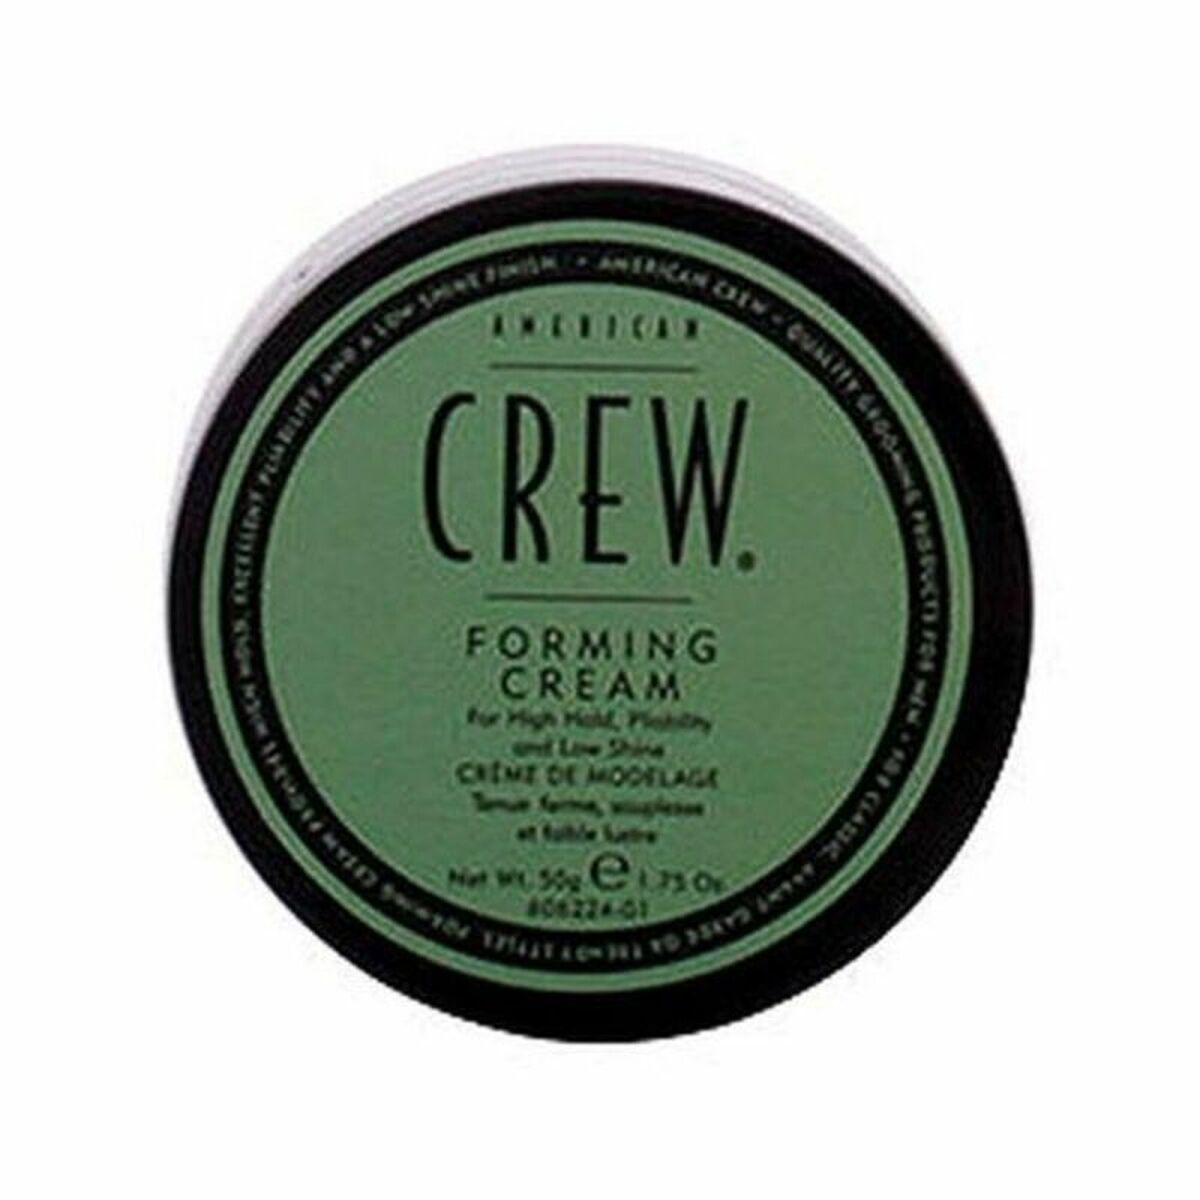 Formgivning creme American Crew (85 g)